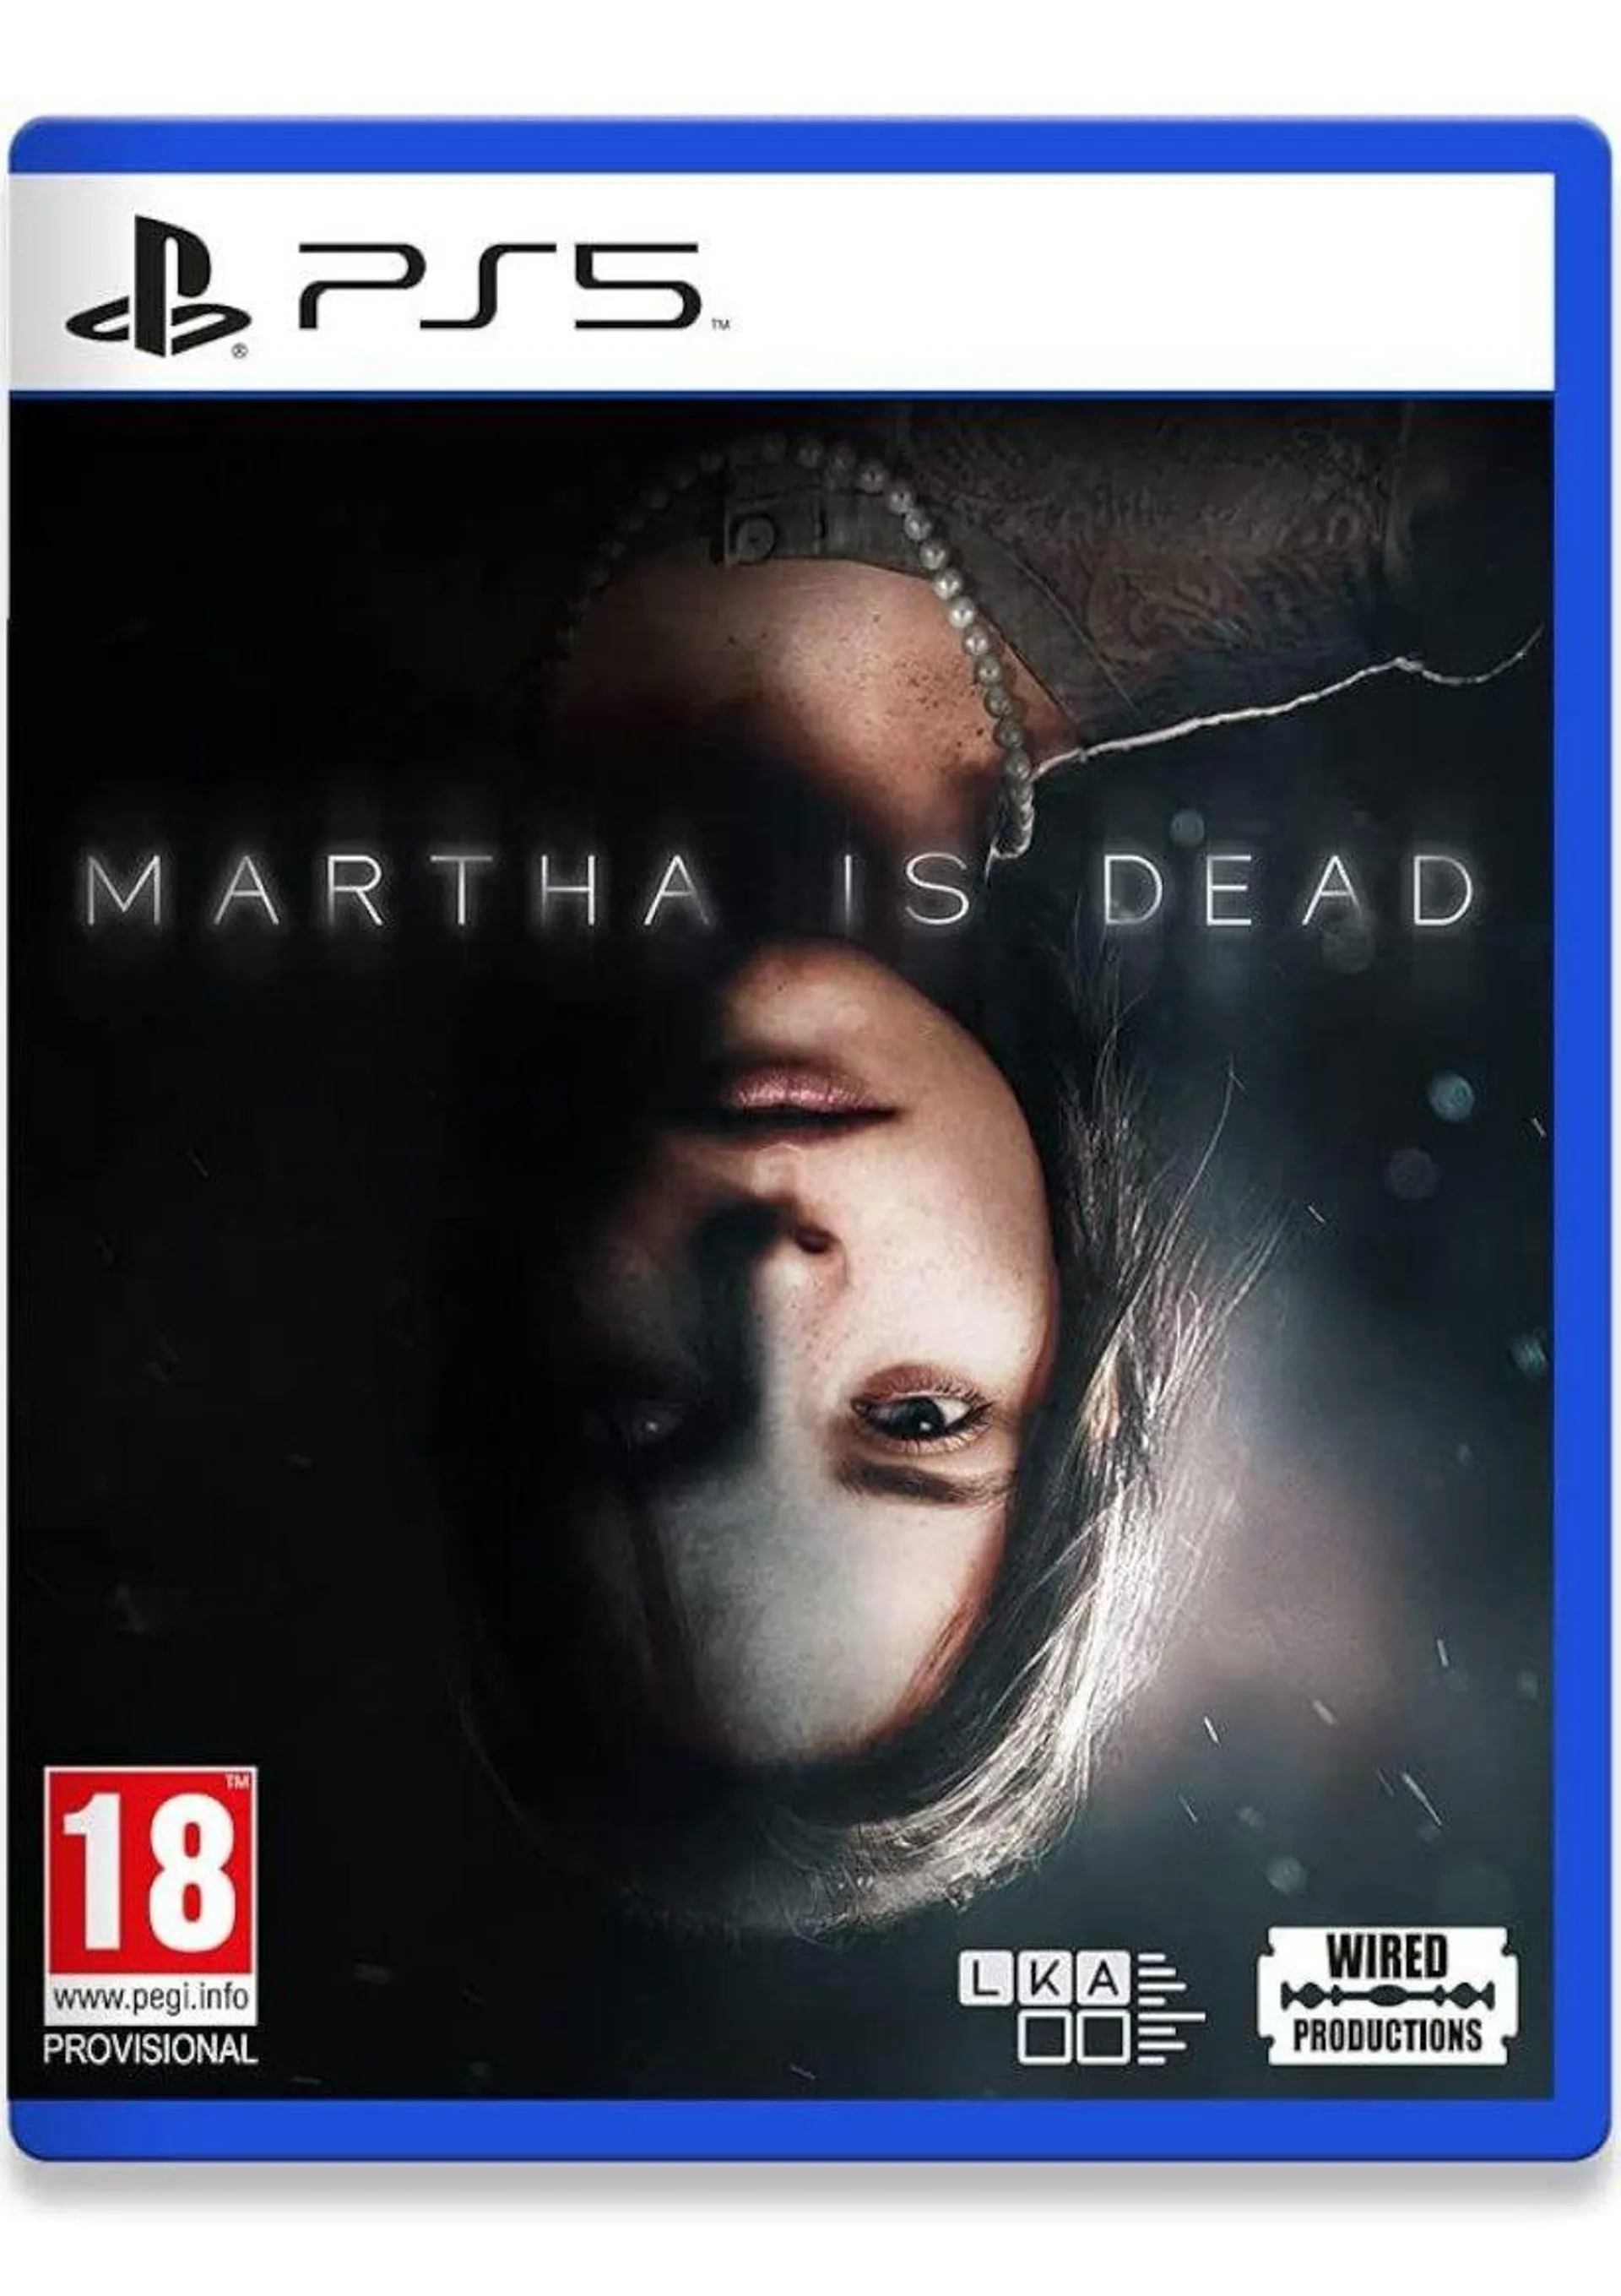 Martha Is Dead on PlayStation 5